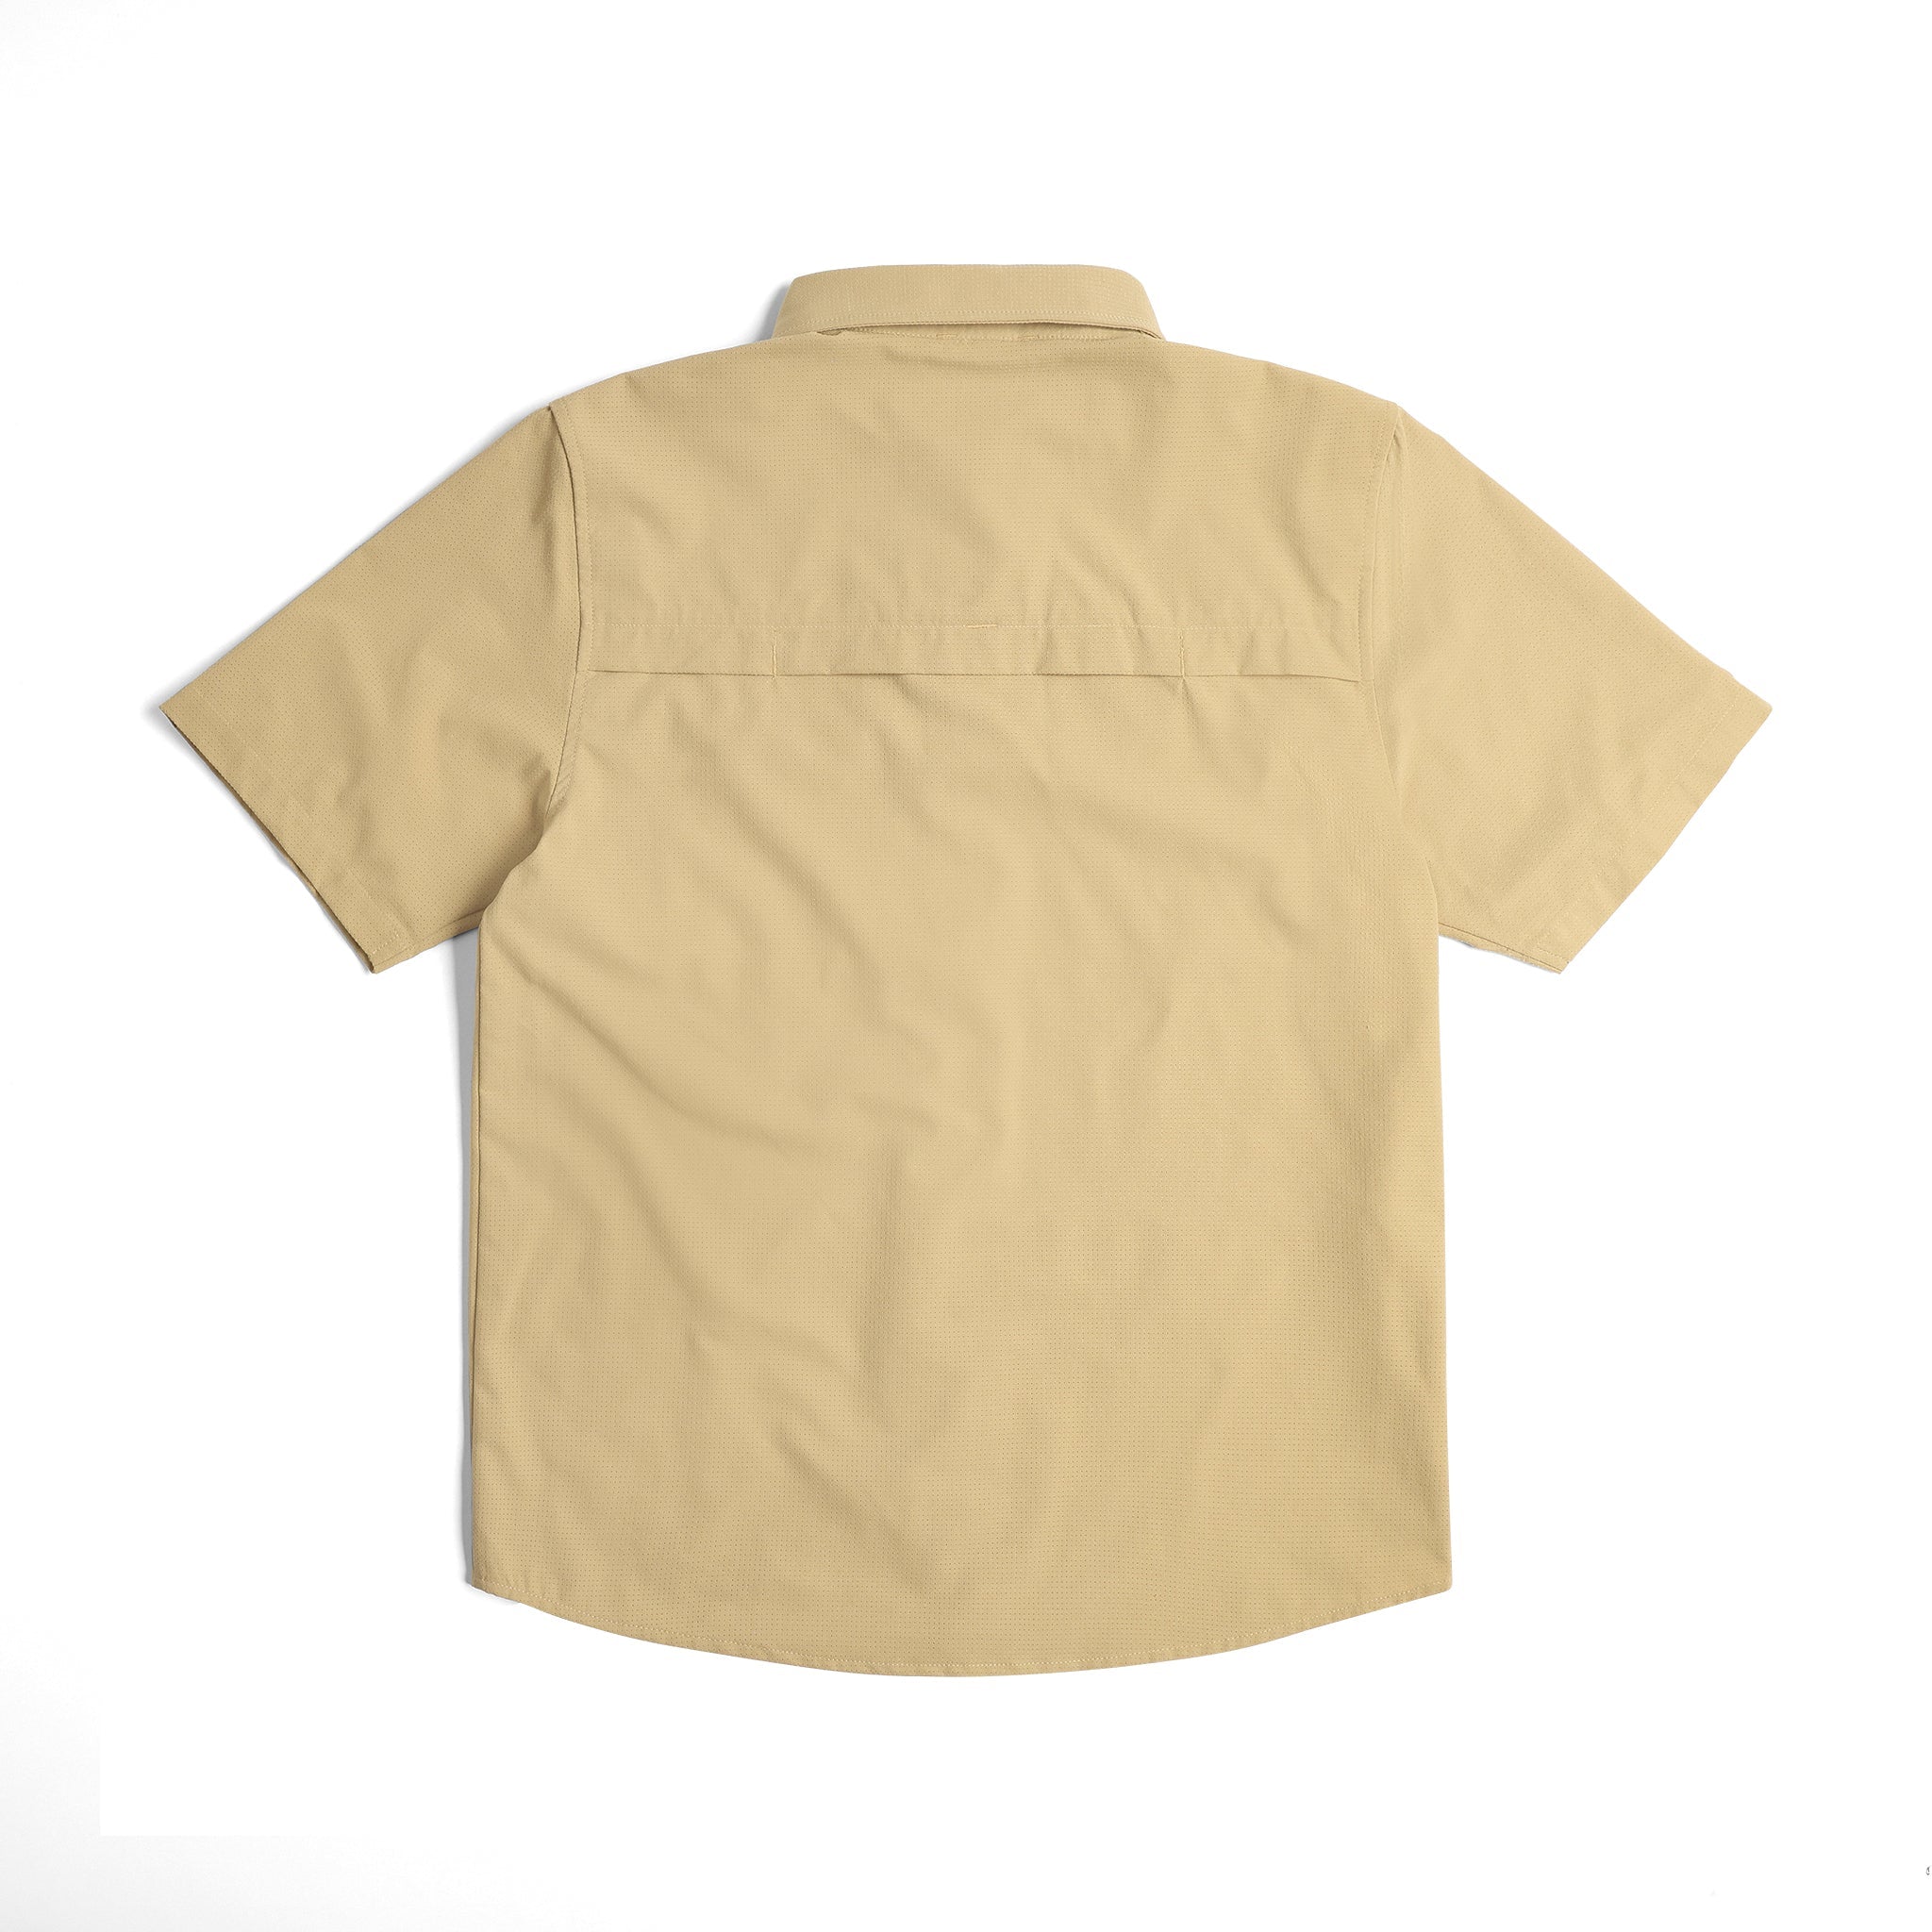 Back View of Topo Designs Retro River Shirt Ss - Men's in "Sahara"